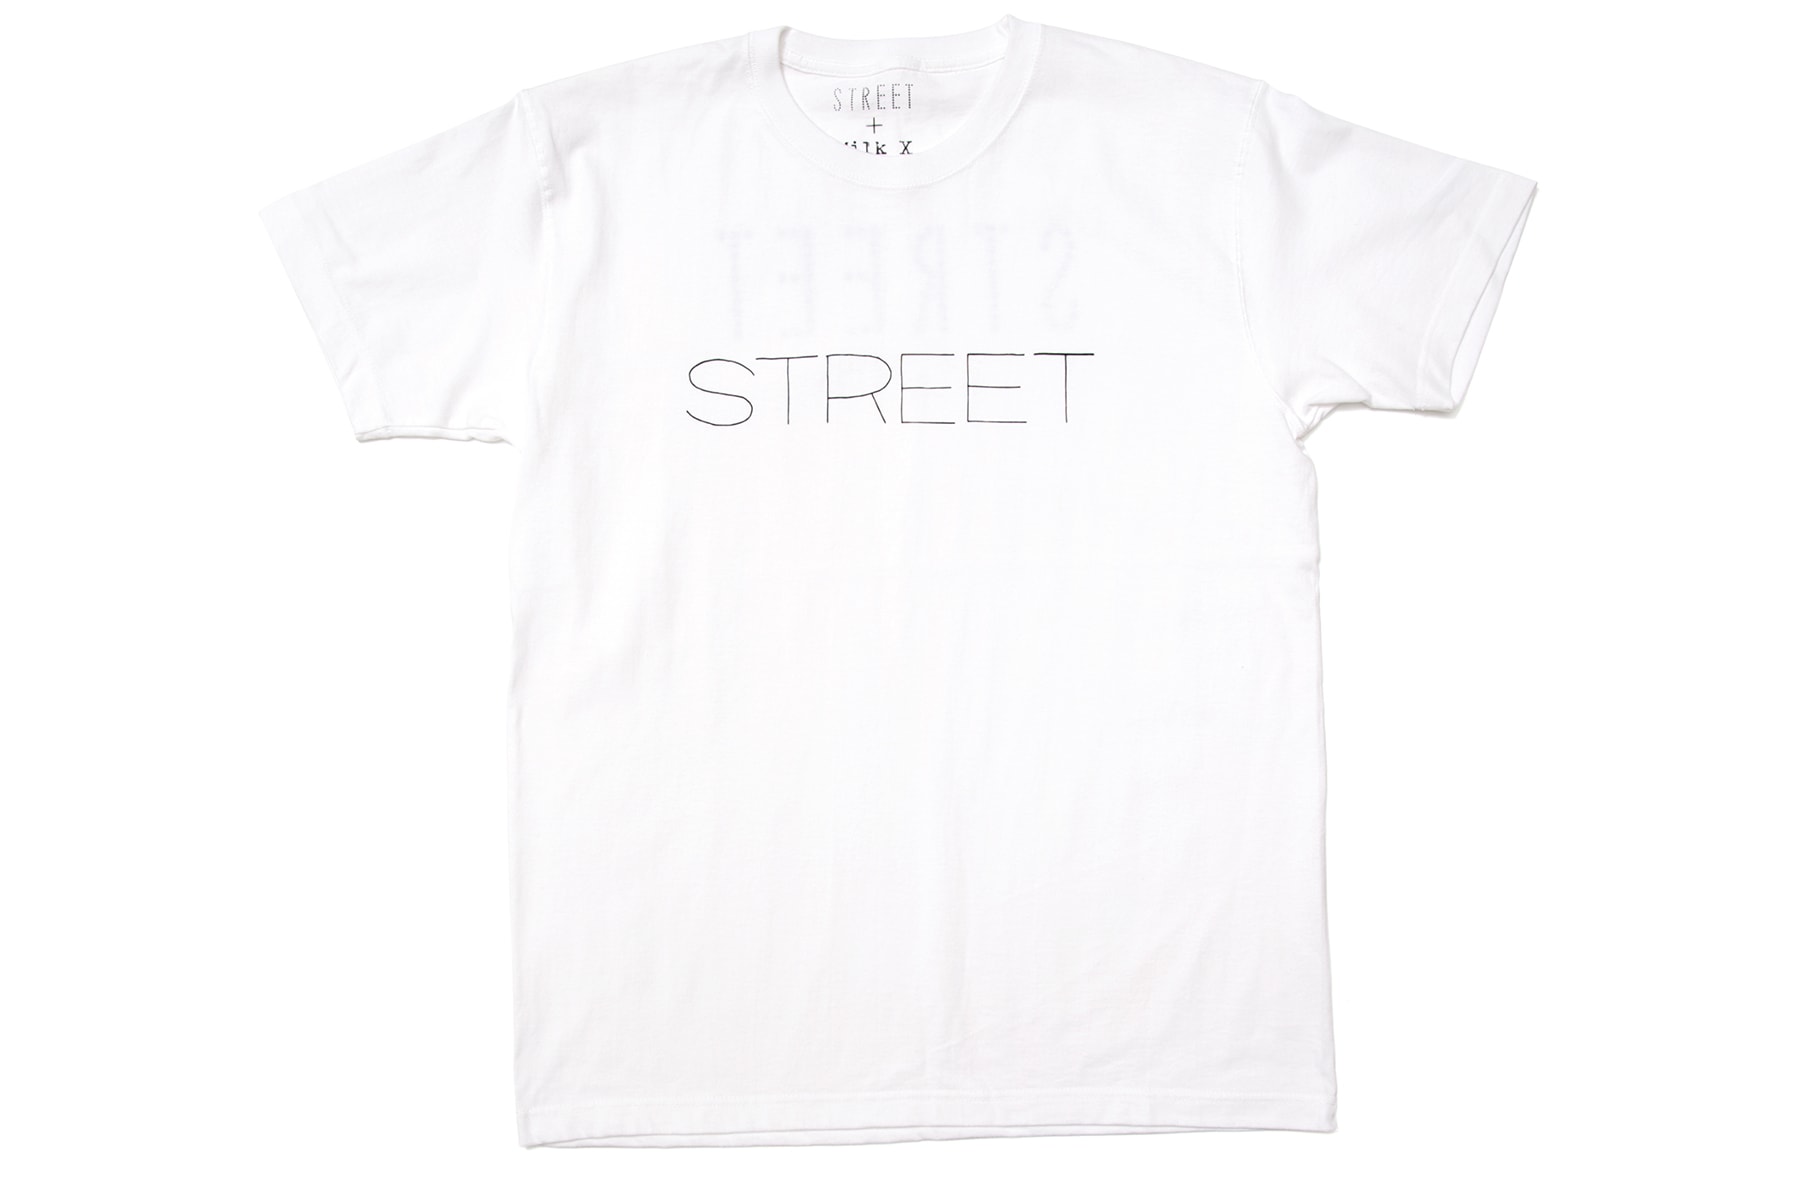 《MILK X》與《STREET》攜手推出服飾聯乘系列